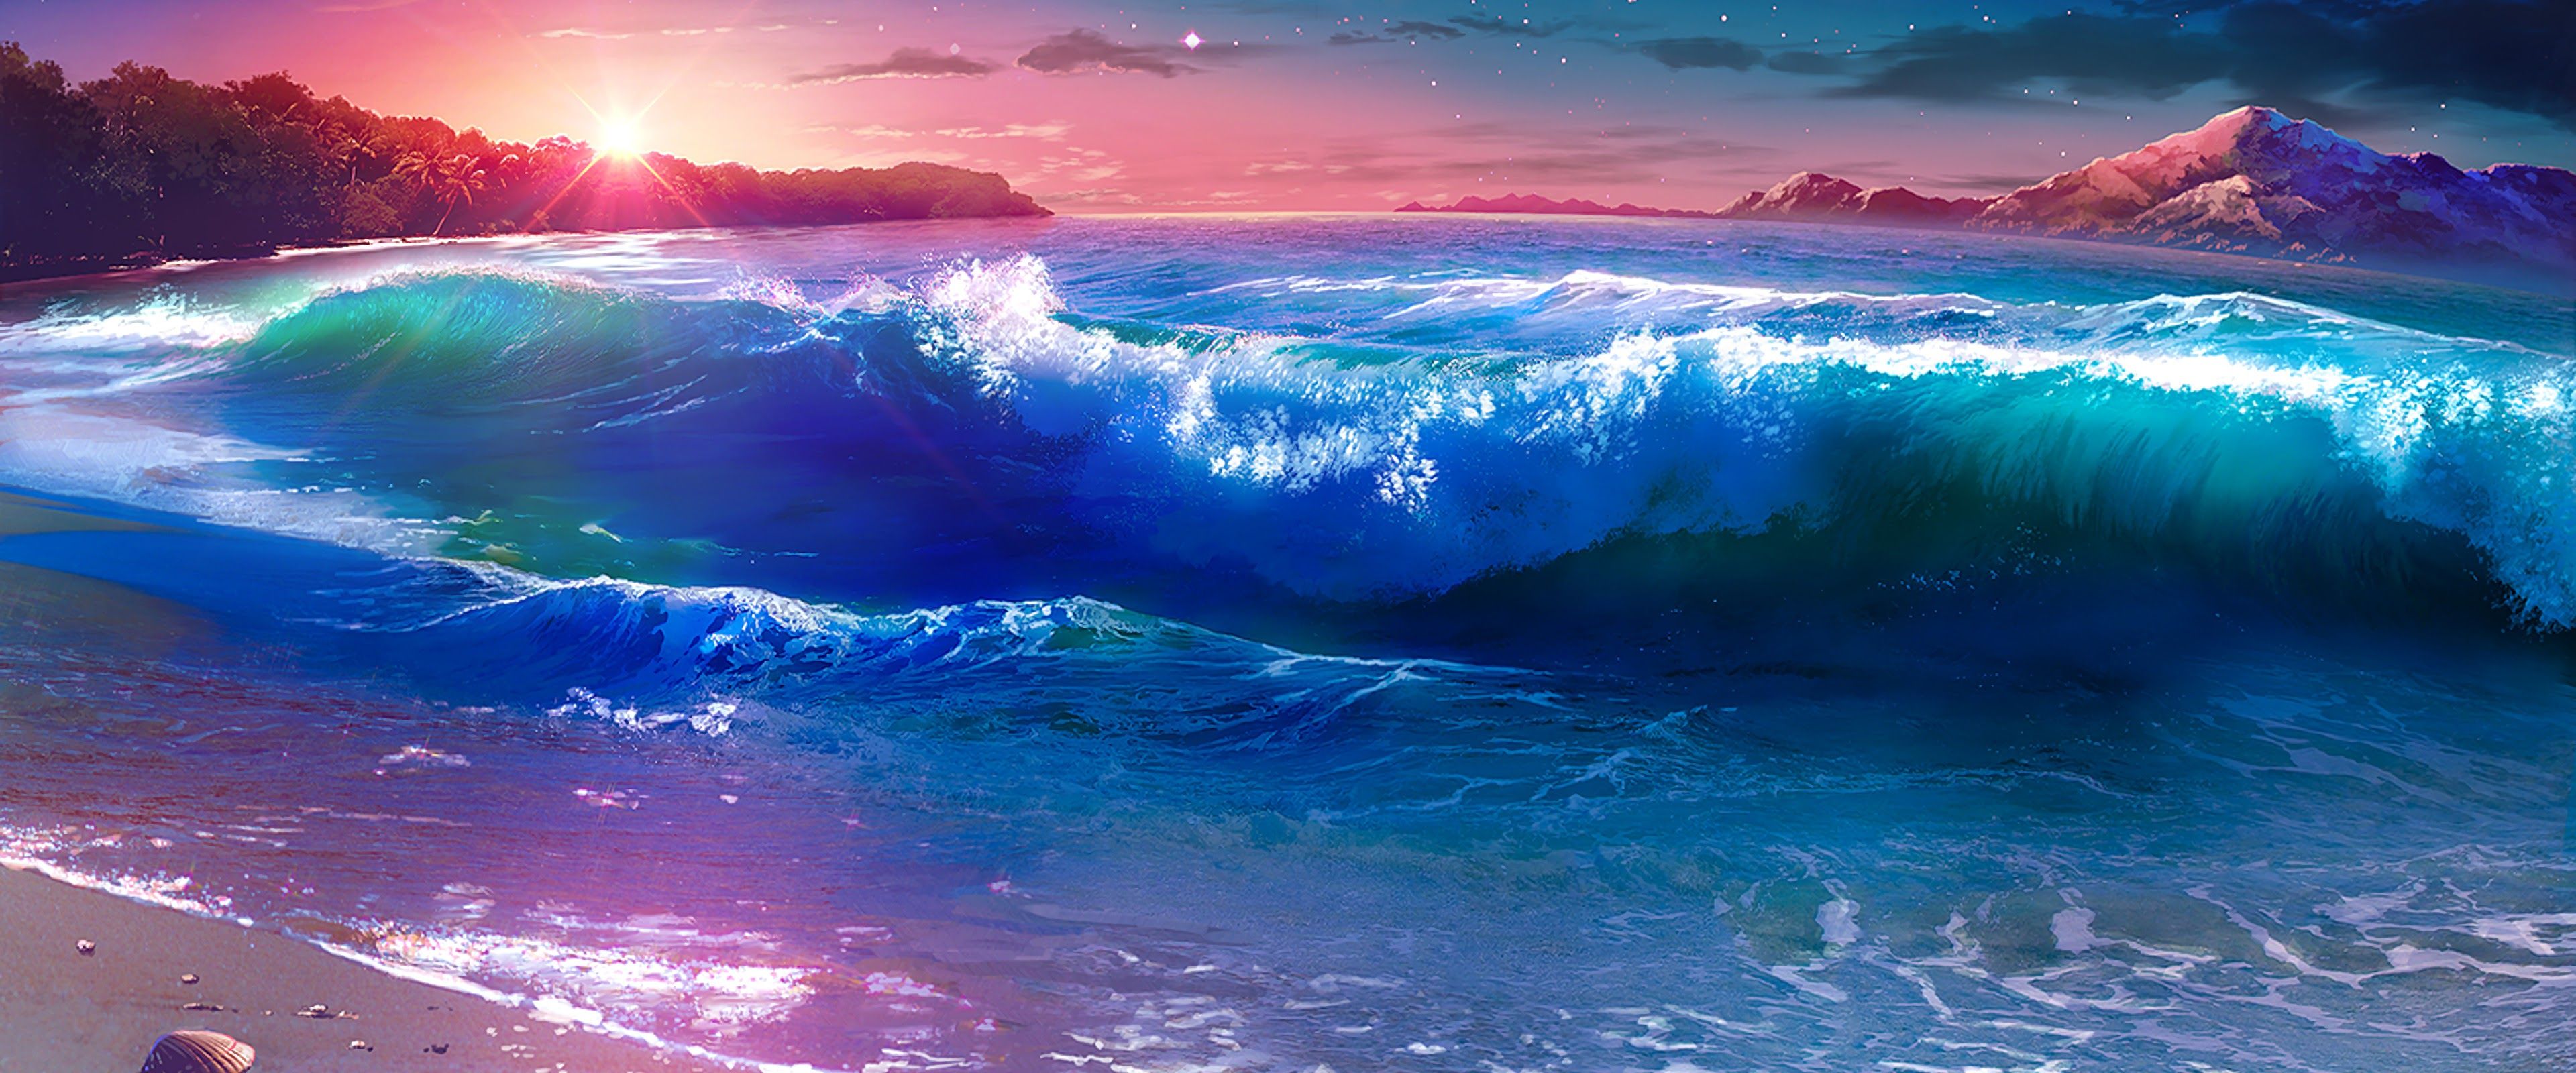 Beach Waves Sunset Scenery Anime 4K Wallpaper